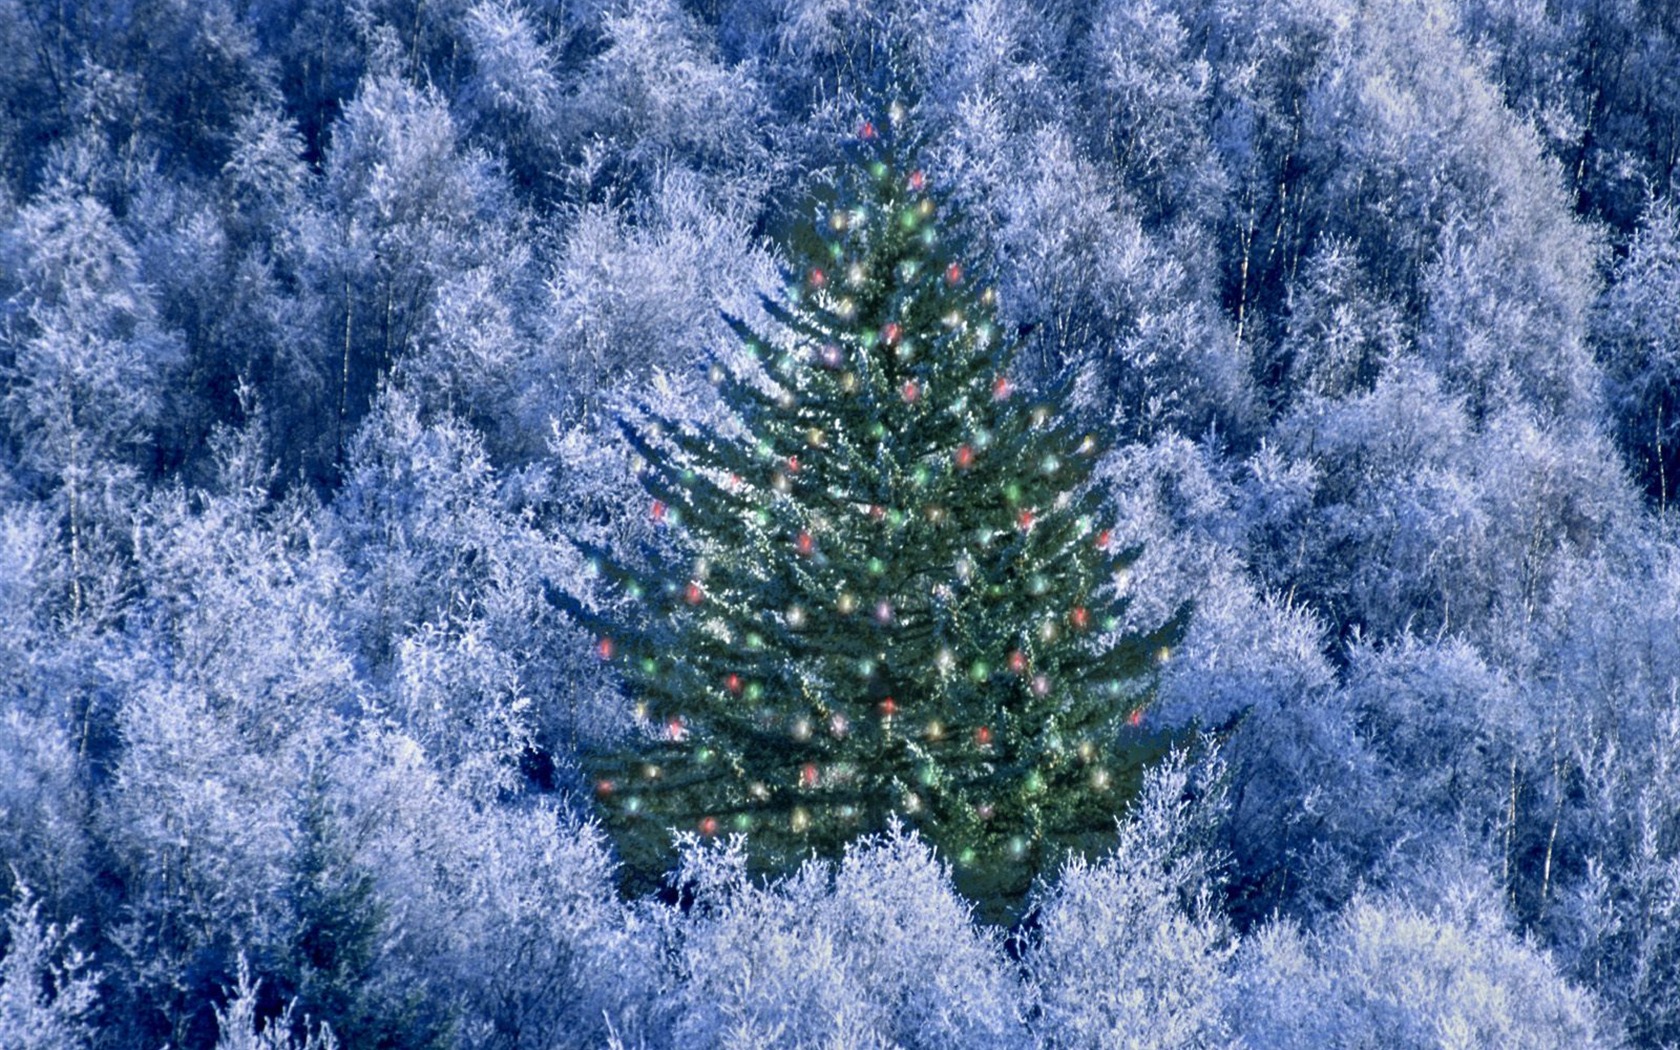 Fond d'écran de Noël série aménagement paysager (4) #15 - 1680x1050